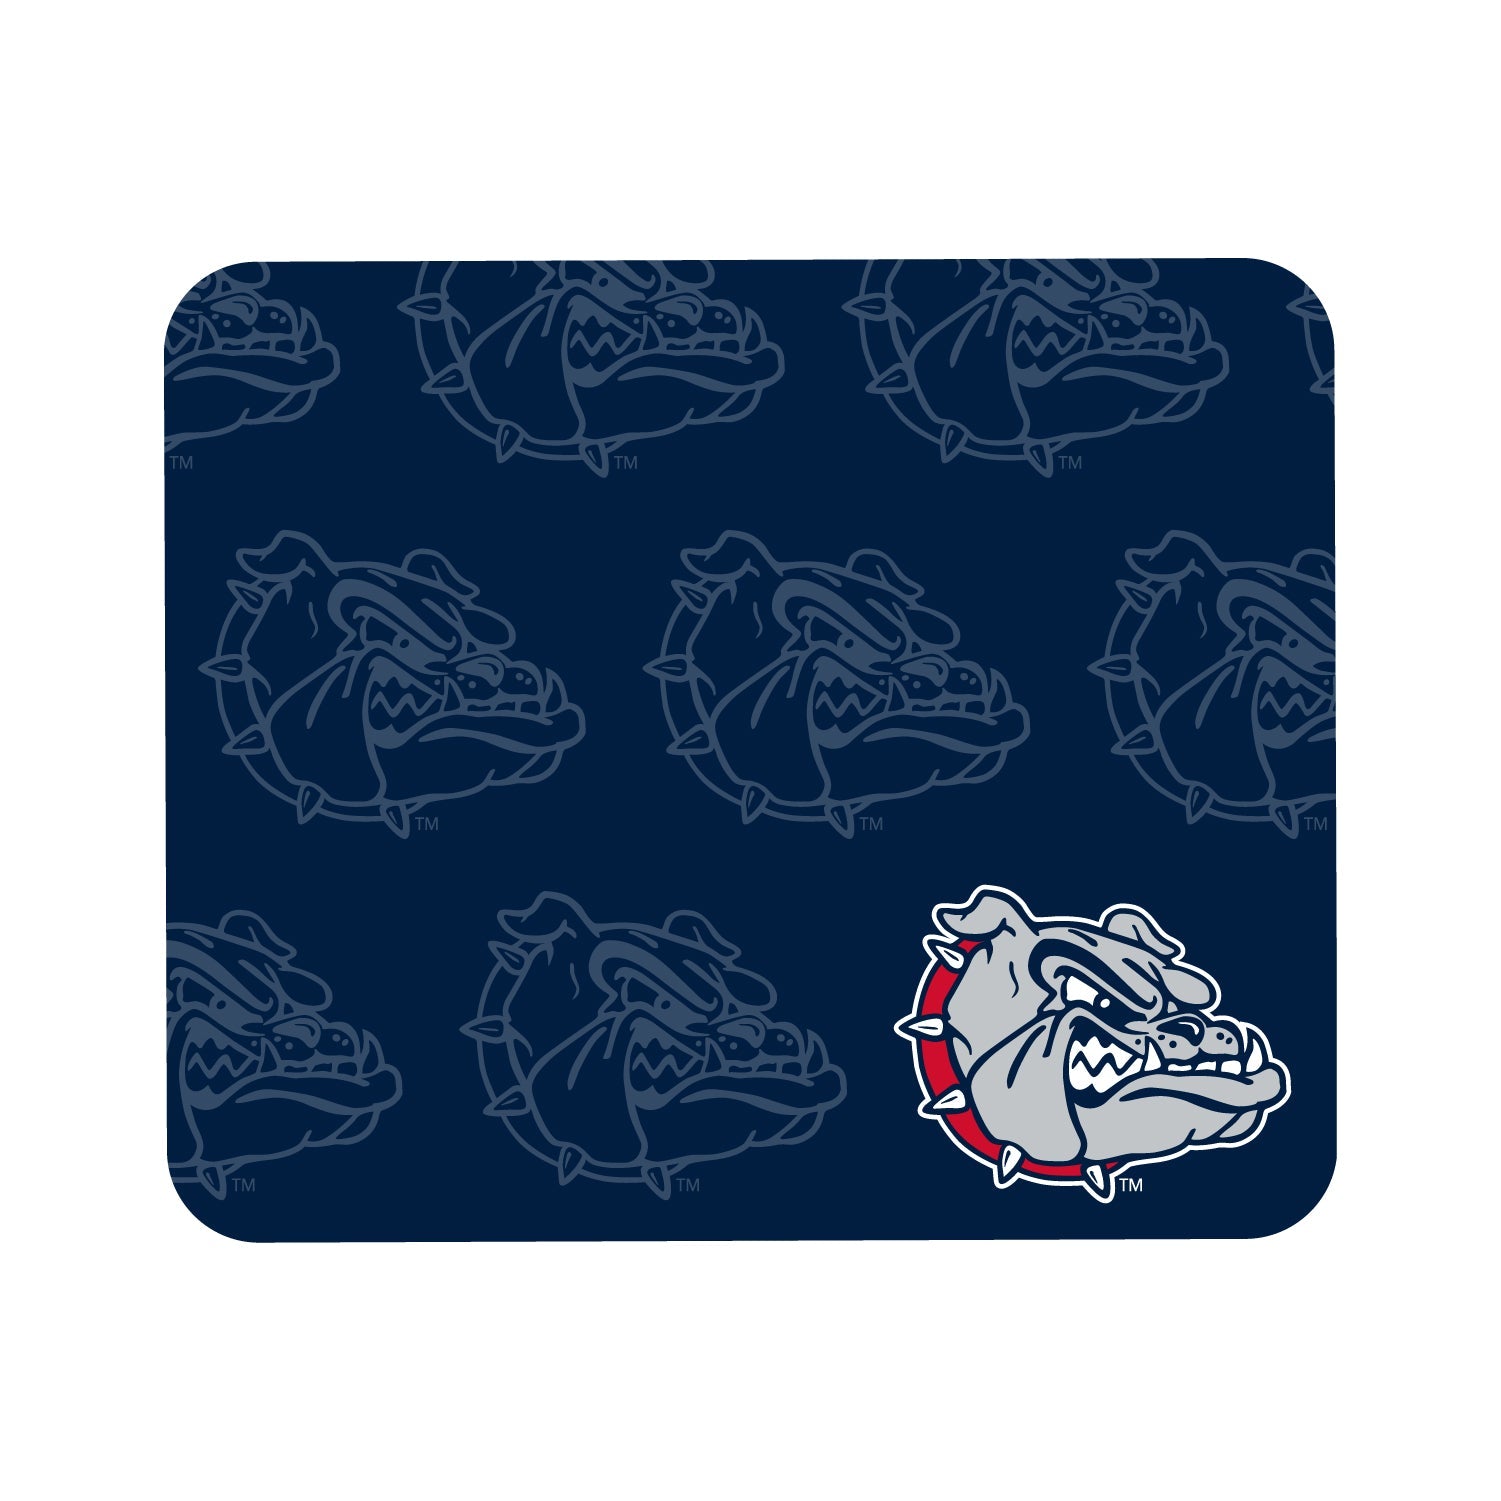 Gonzaga University Mousepad, Mascot Repeat V1